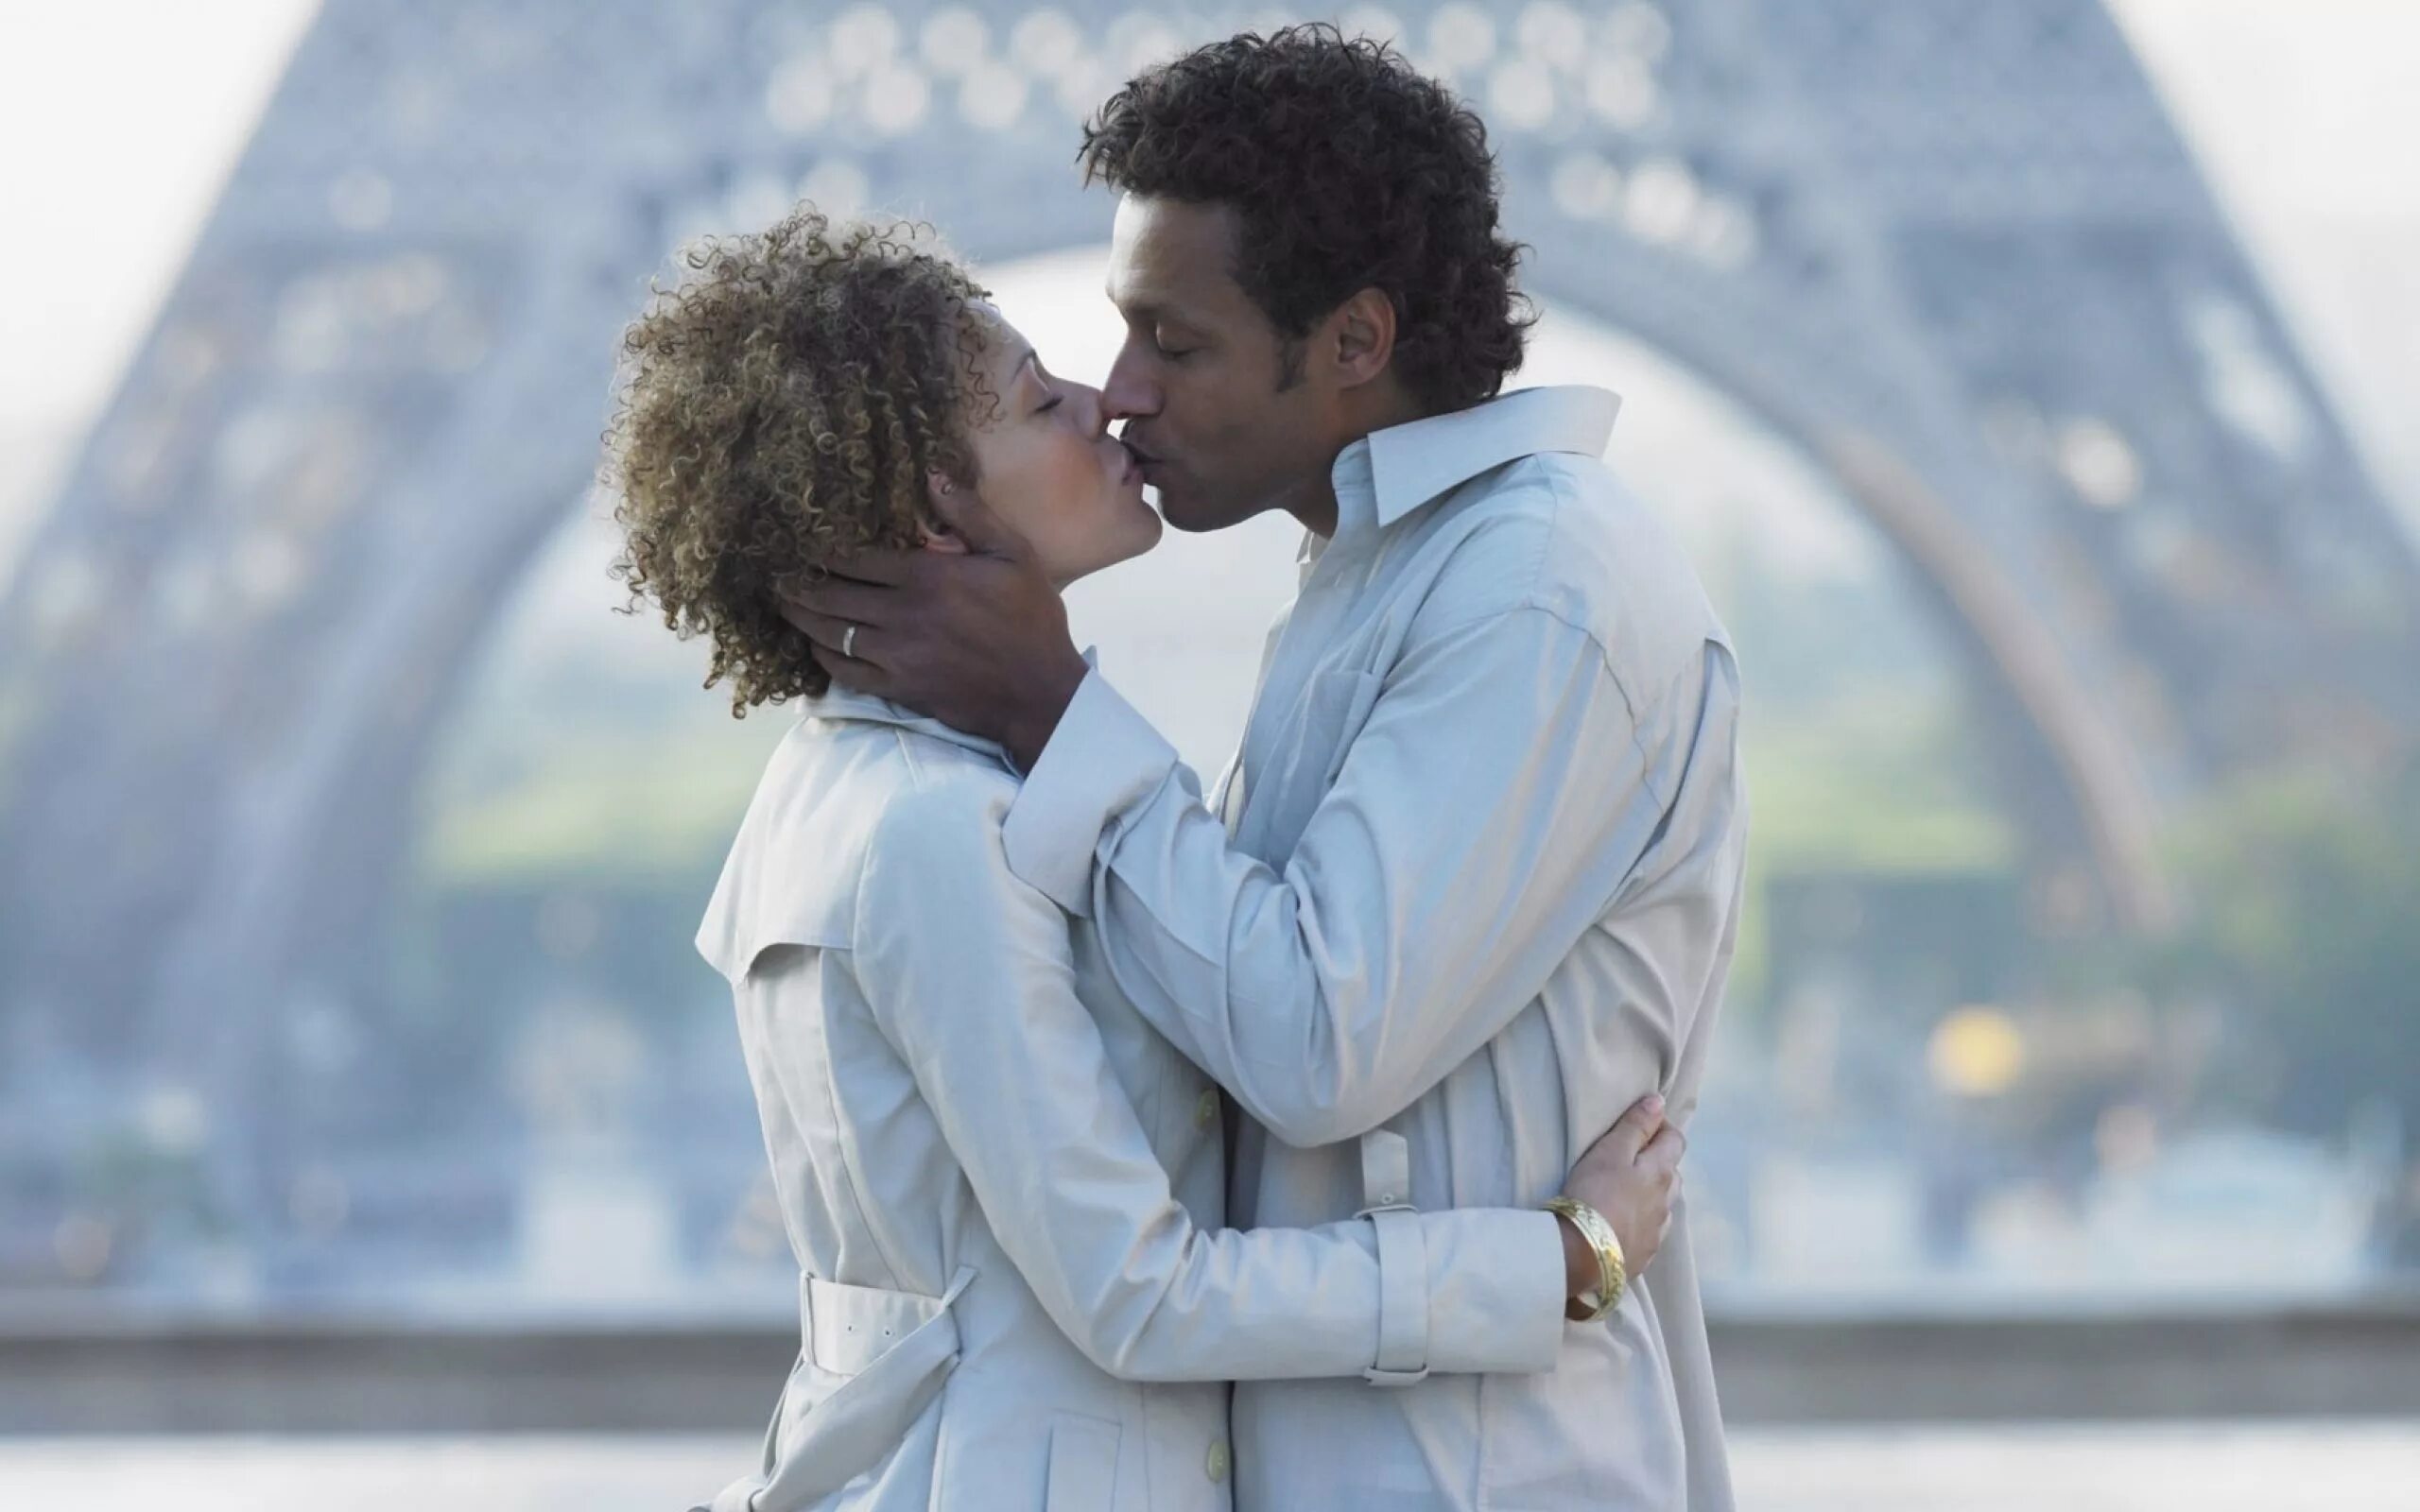 Француз думать. Влюбленная пара. Французский поцелуй. Влюбленные в Париже. Франция поцелуй.